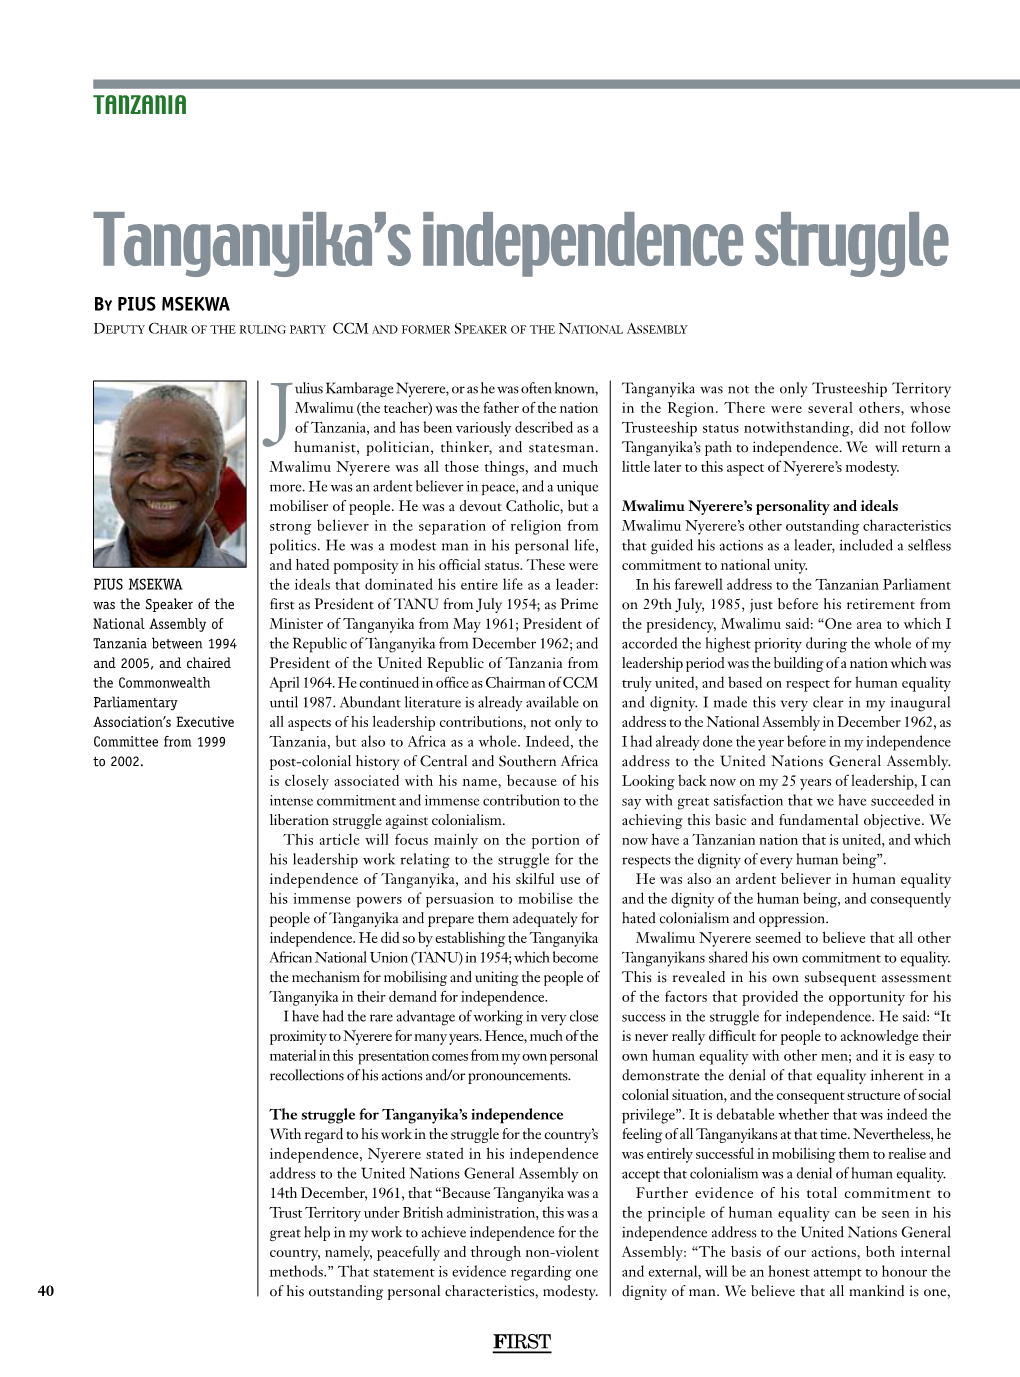 Tanganyika's Independence Struggle